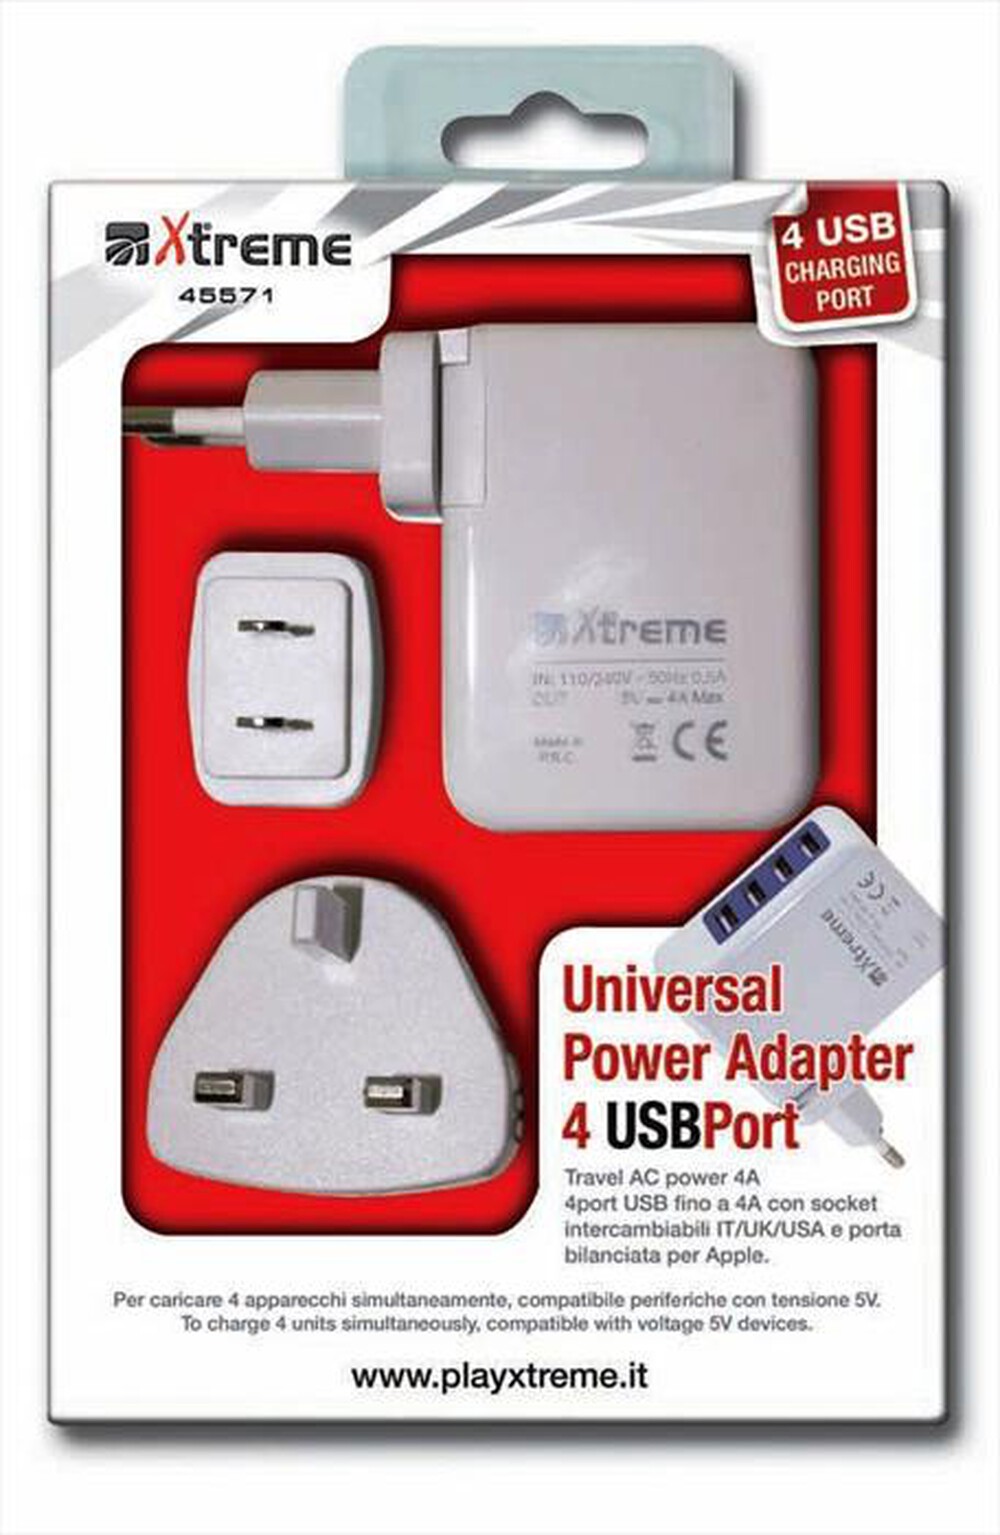 "XTREME - 45571 - Alimentatore 4 porte USB - "